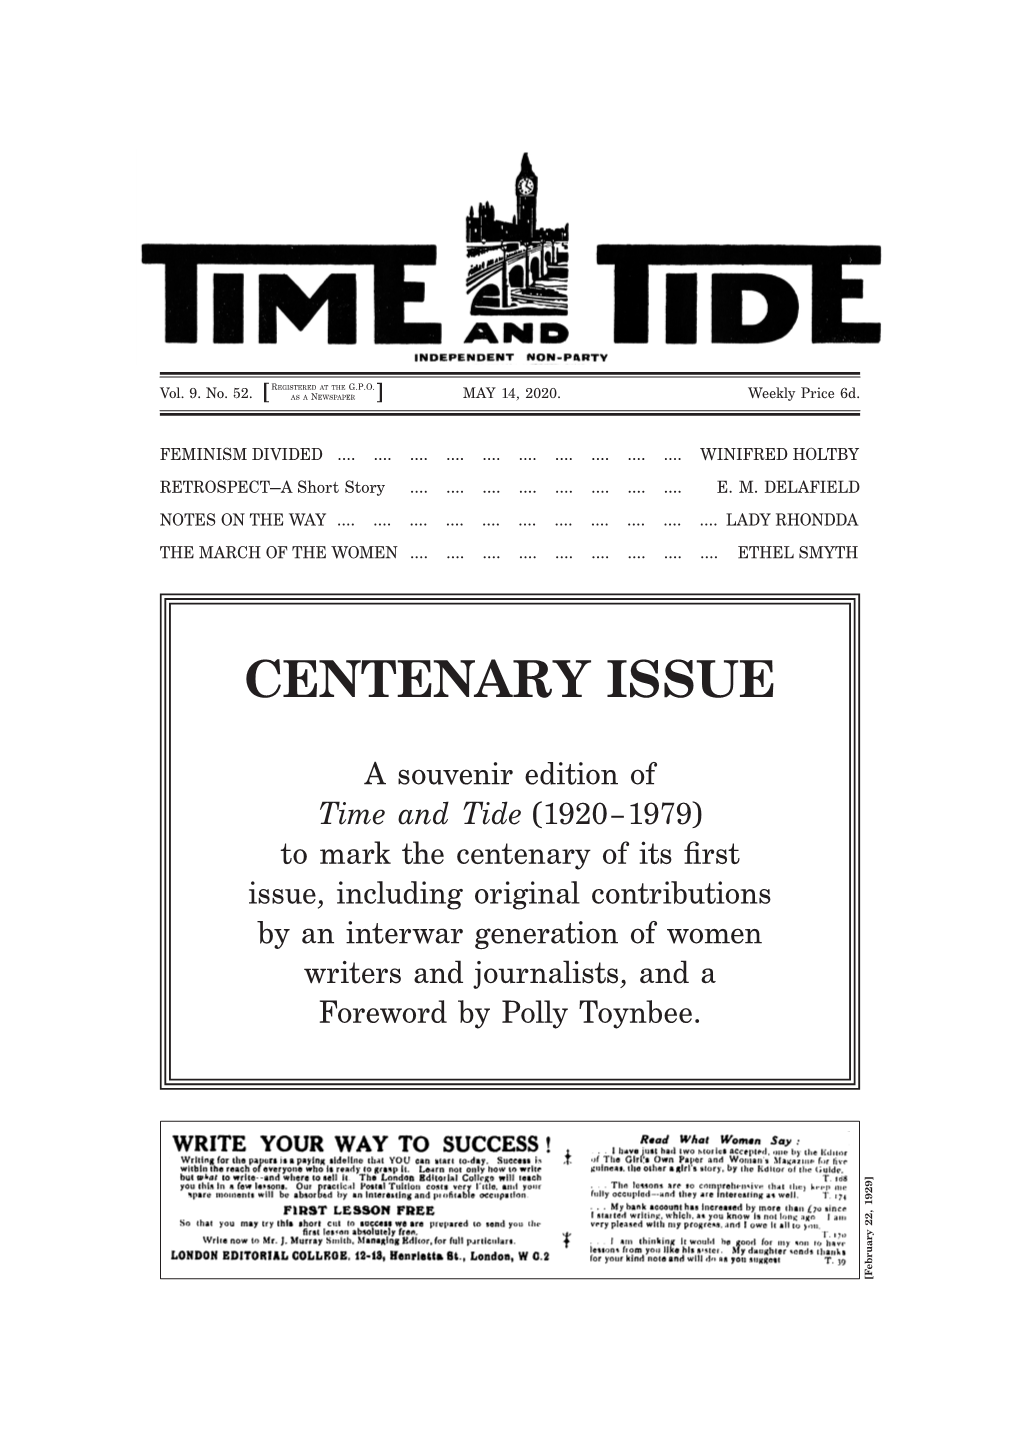 Centenary Issue